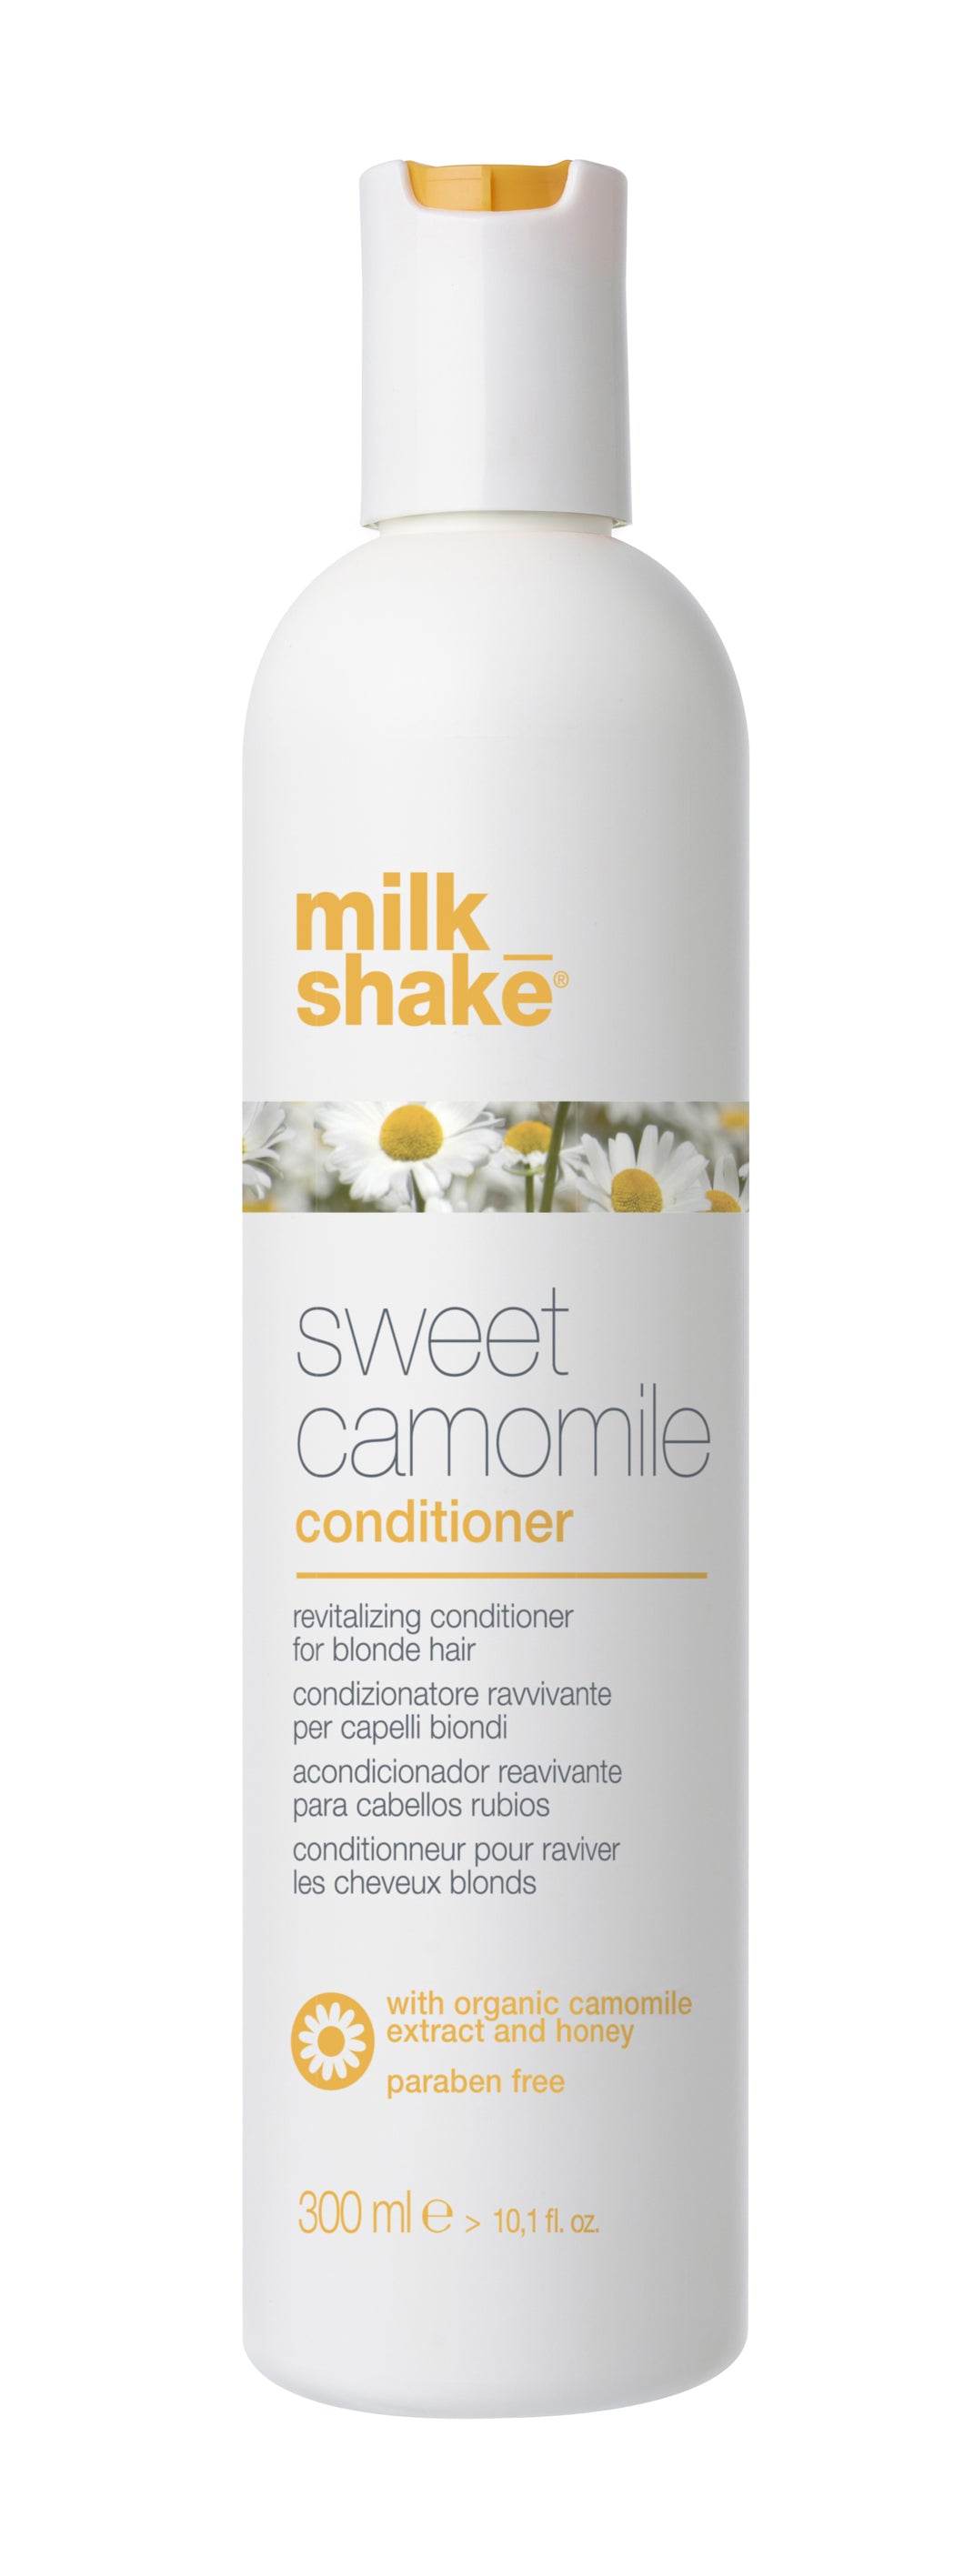 milk_shake sweet camomile conditioner